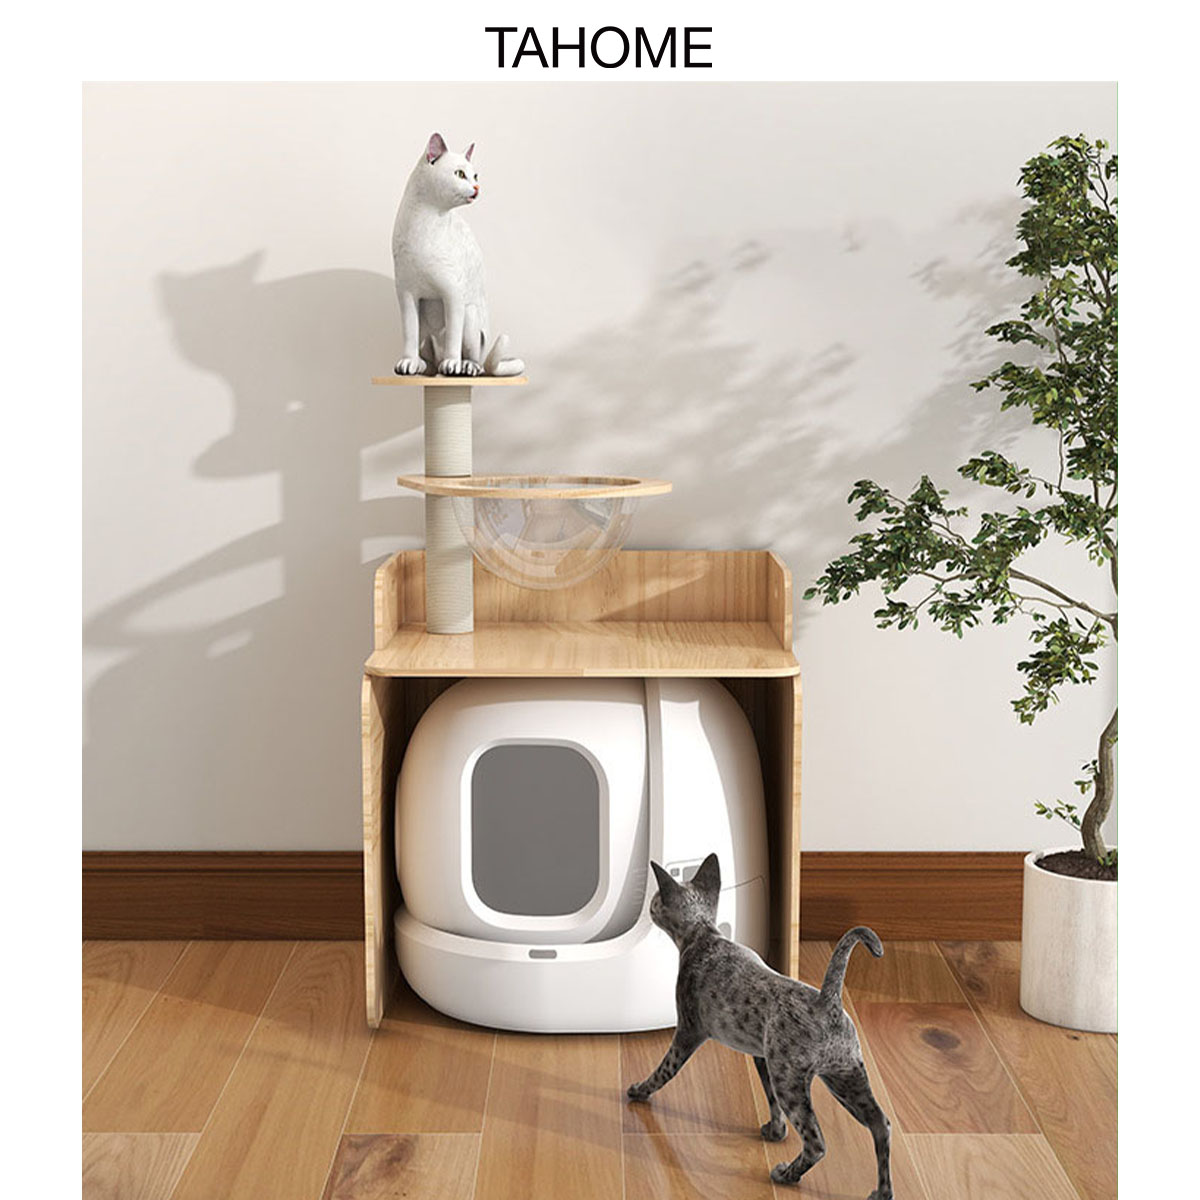 TAHOME 猫用トイレキャビネット、小型猫用トイレ収納ラック、上部消臭猫用クライミングフレーム付き、猫用トイレキャビネット